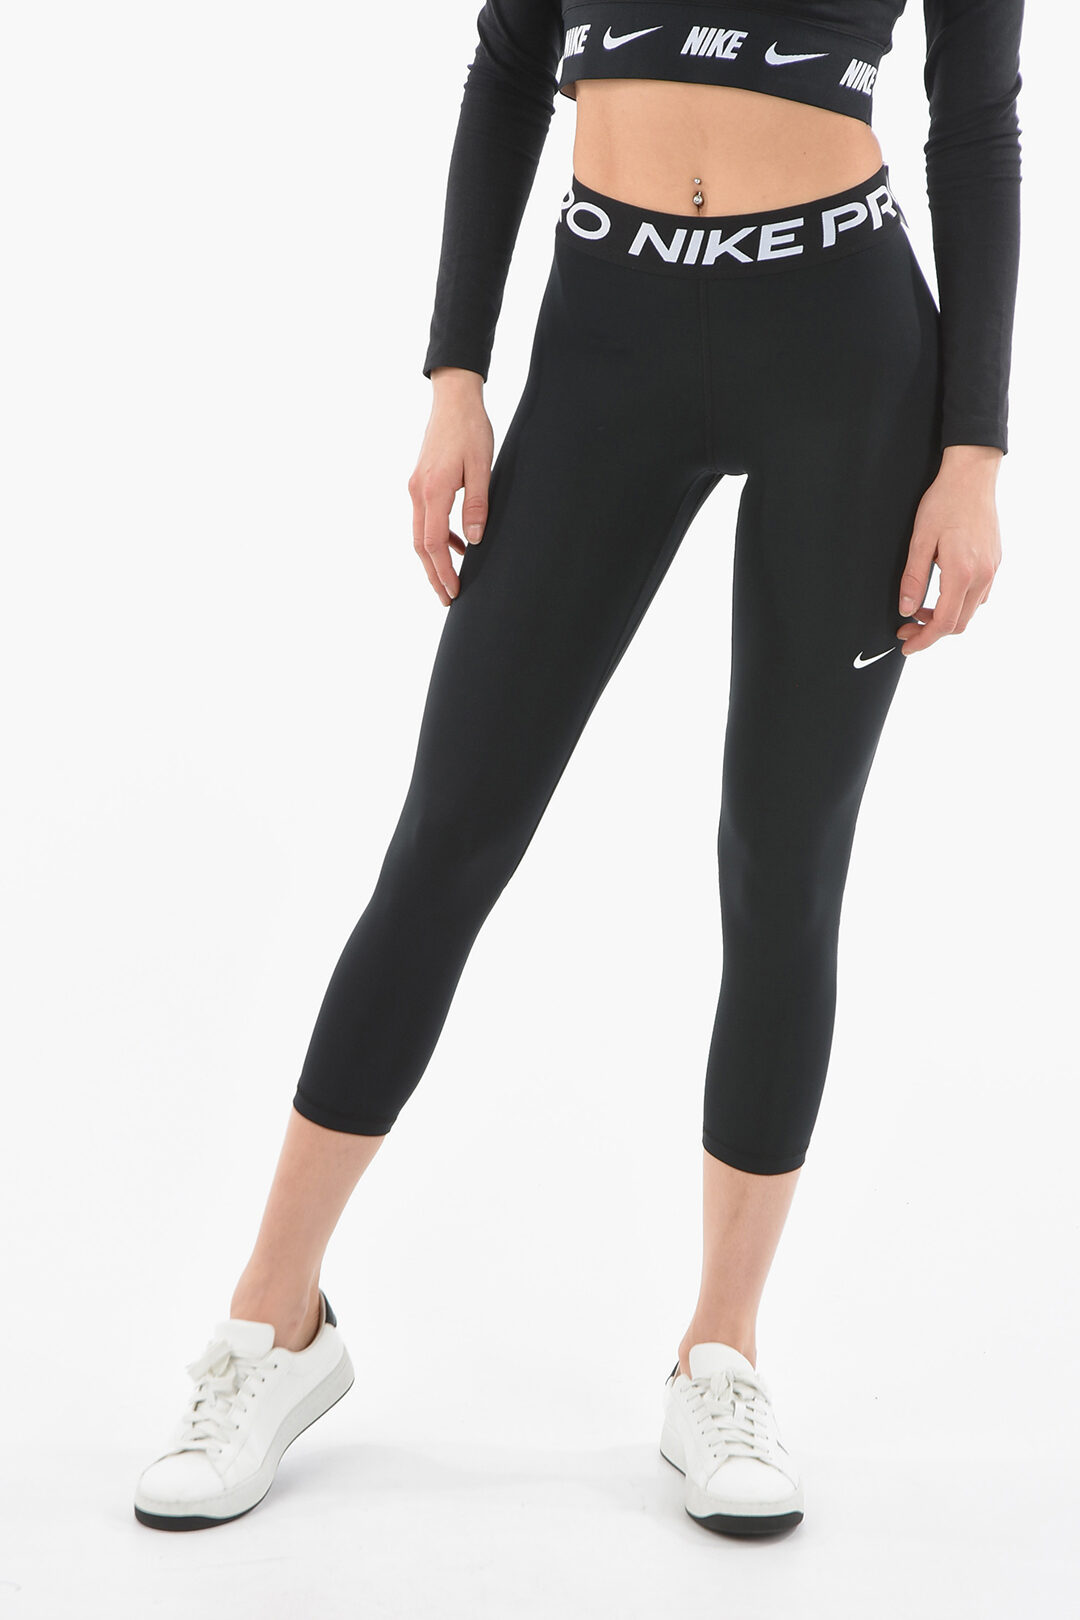 Vami Women's Cotton Stretchable Jeggings - Black Black XL